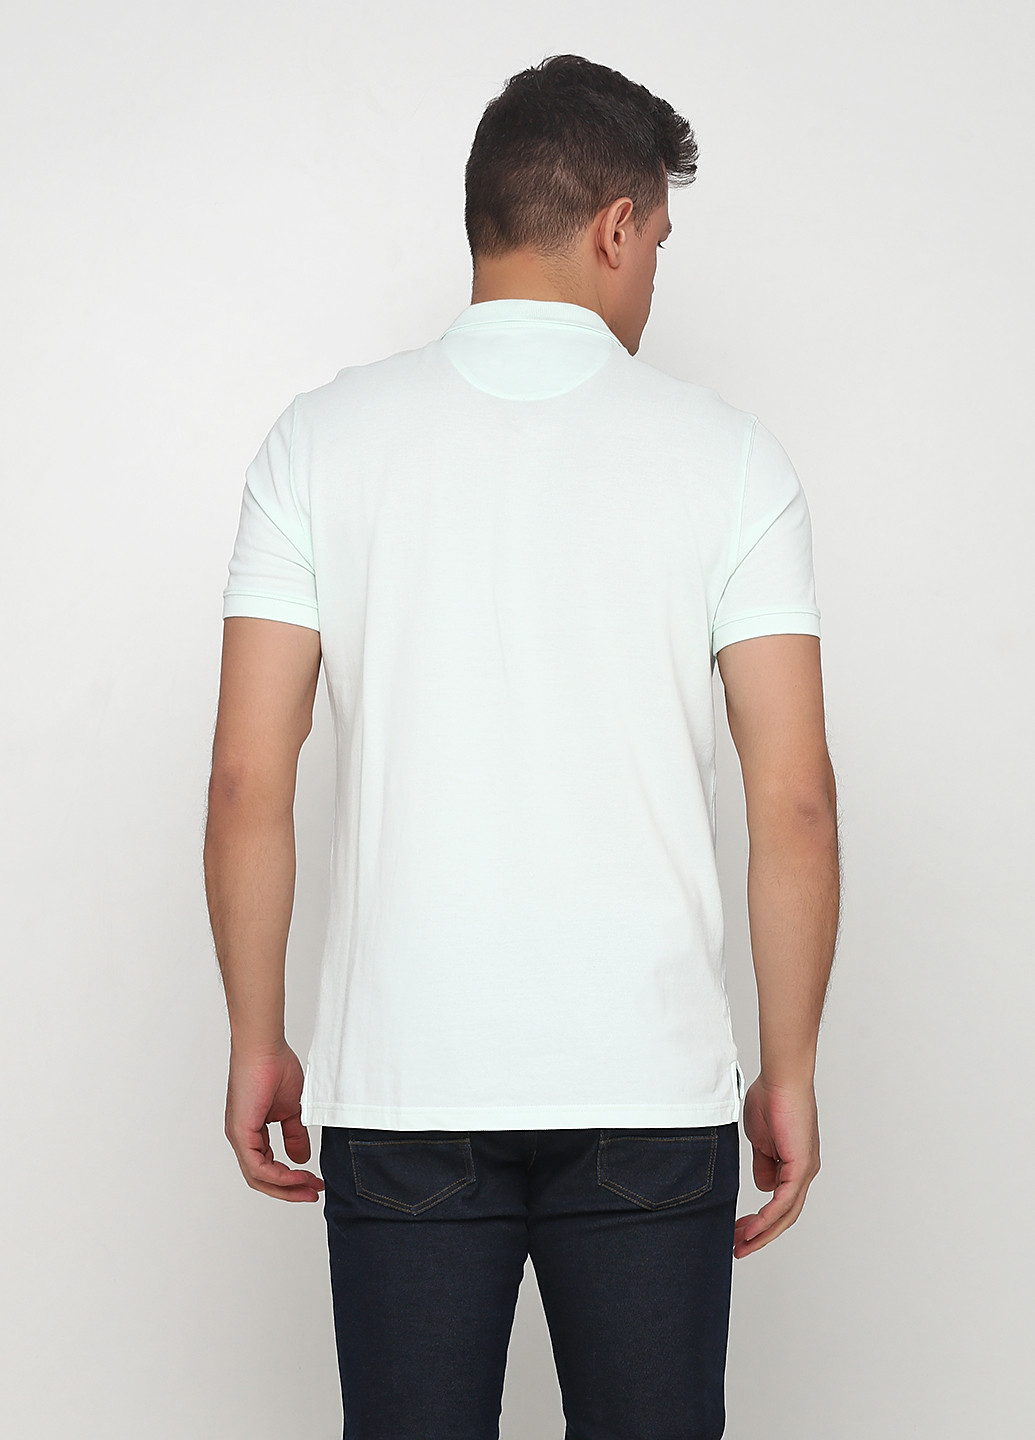 Мятная футболка-поло для мужчин Massimo Dutti однотонная